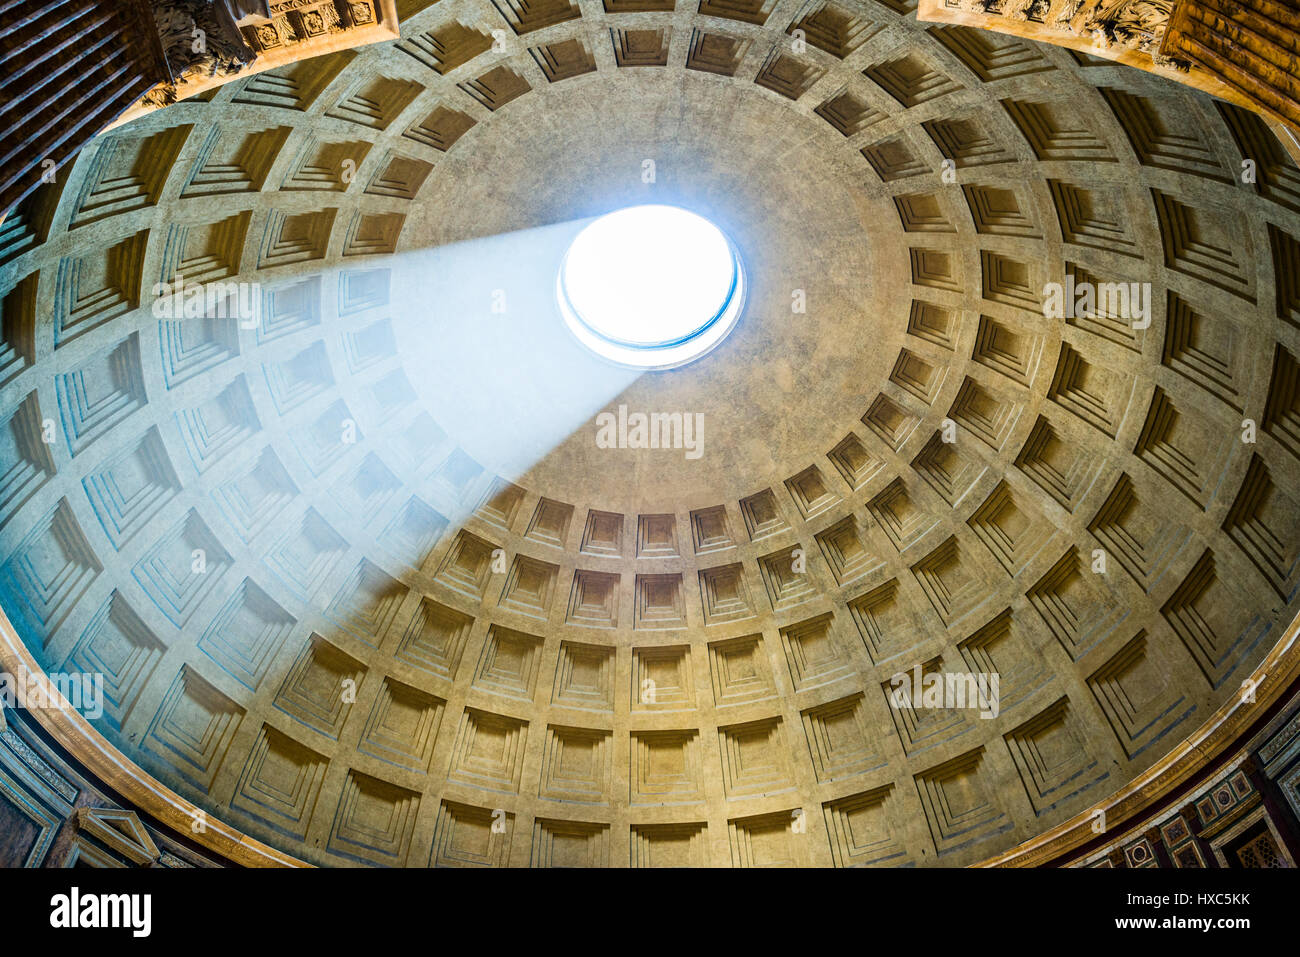 Kuppel des Pantheon, Interieur, römischen Tempel des Trajan Emeperor, römischen Antike, römisch-katholische Kirche Santa Maria Ad Stockfoto